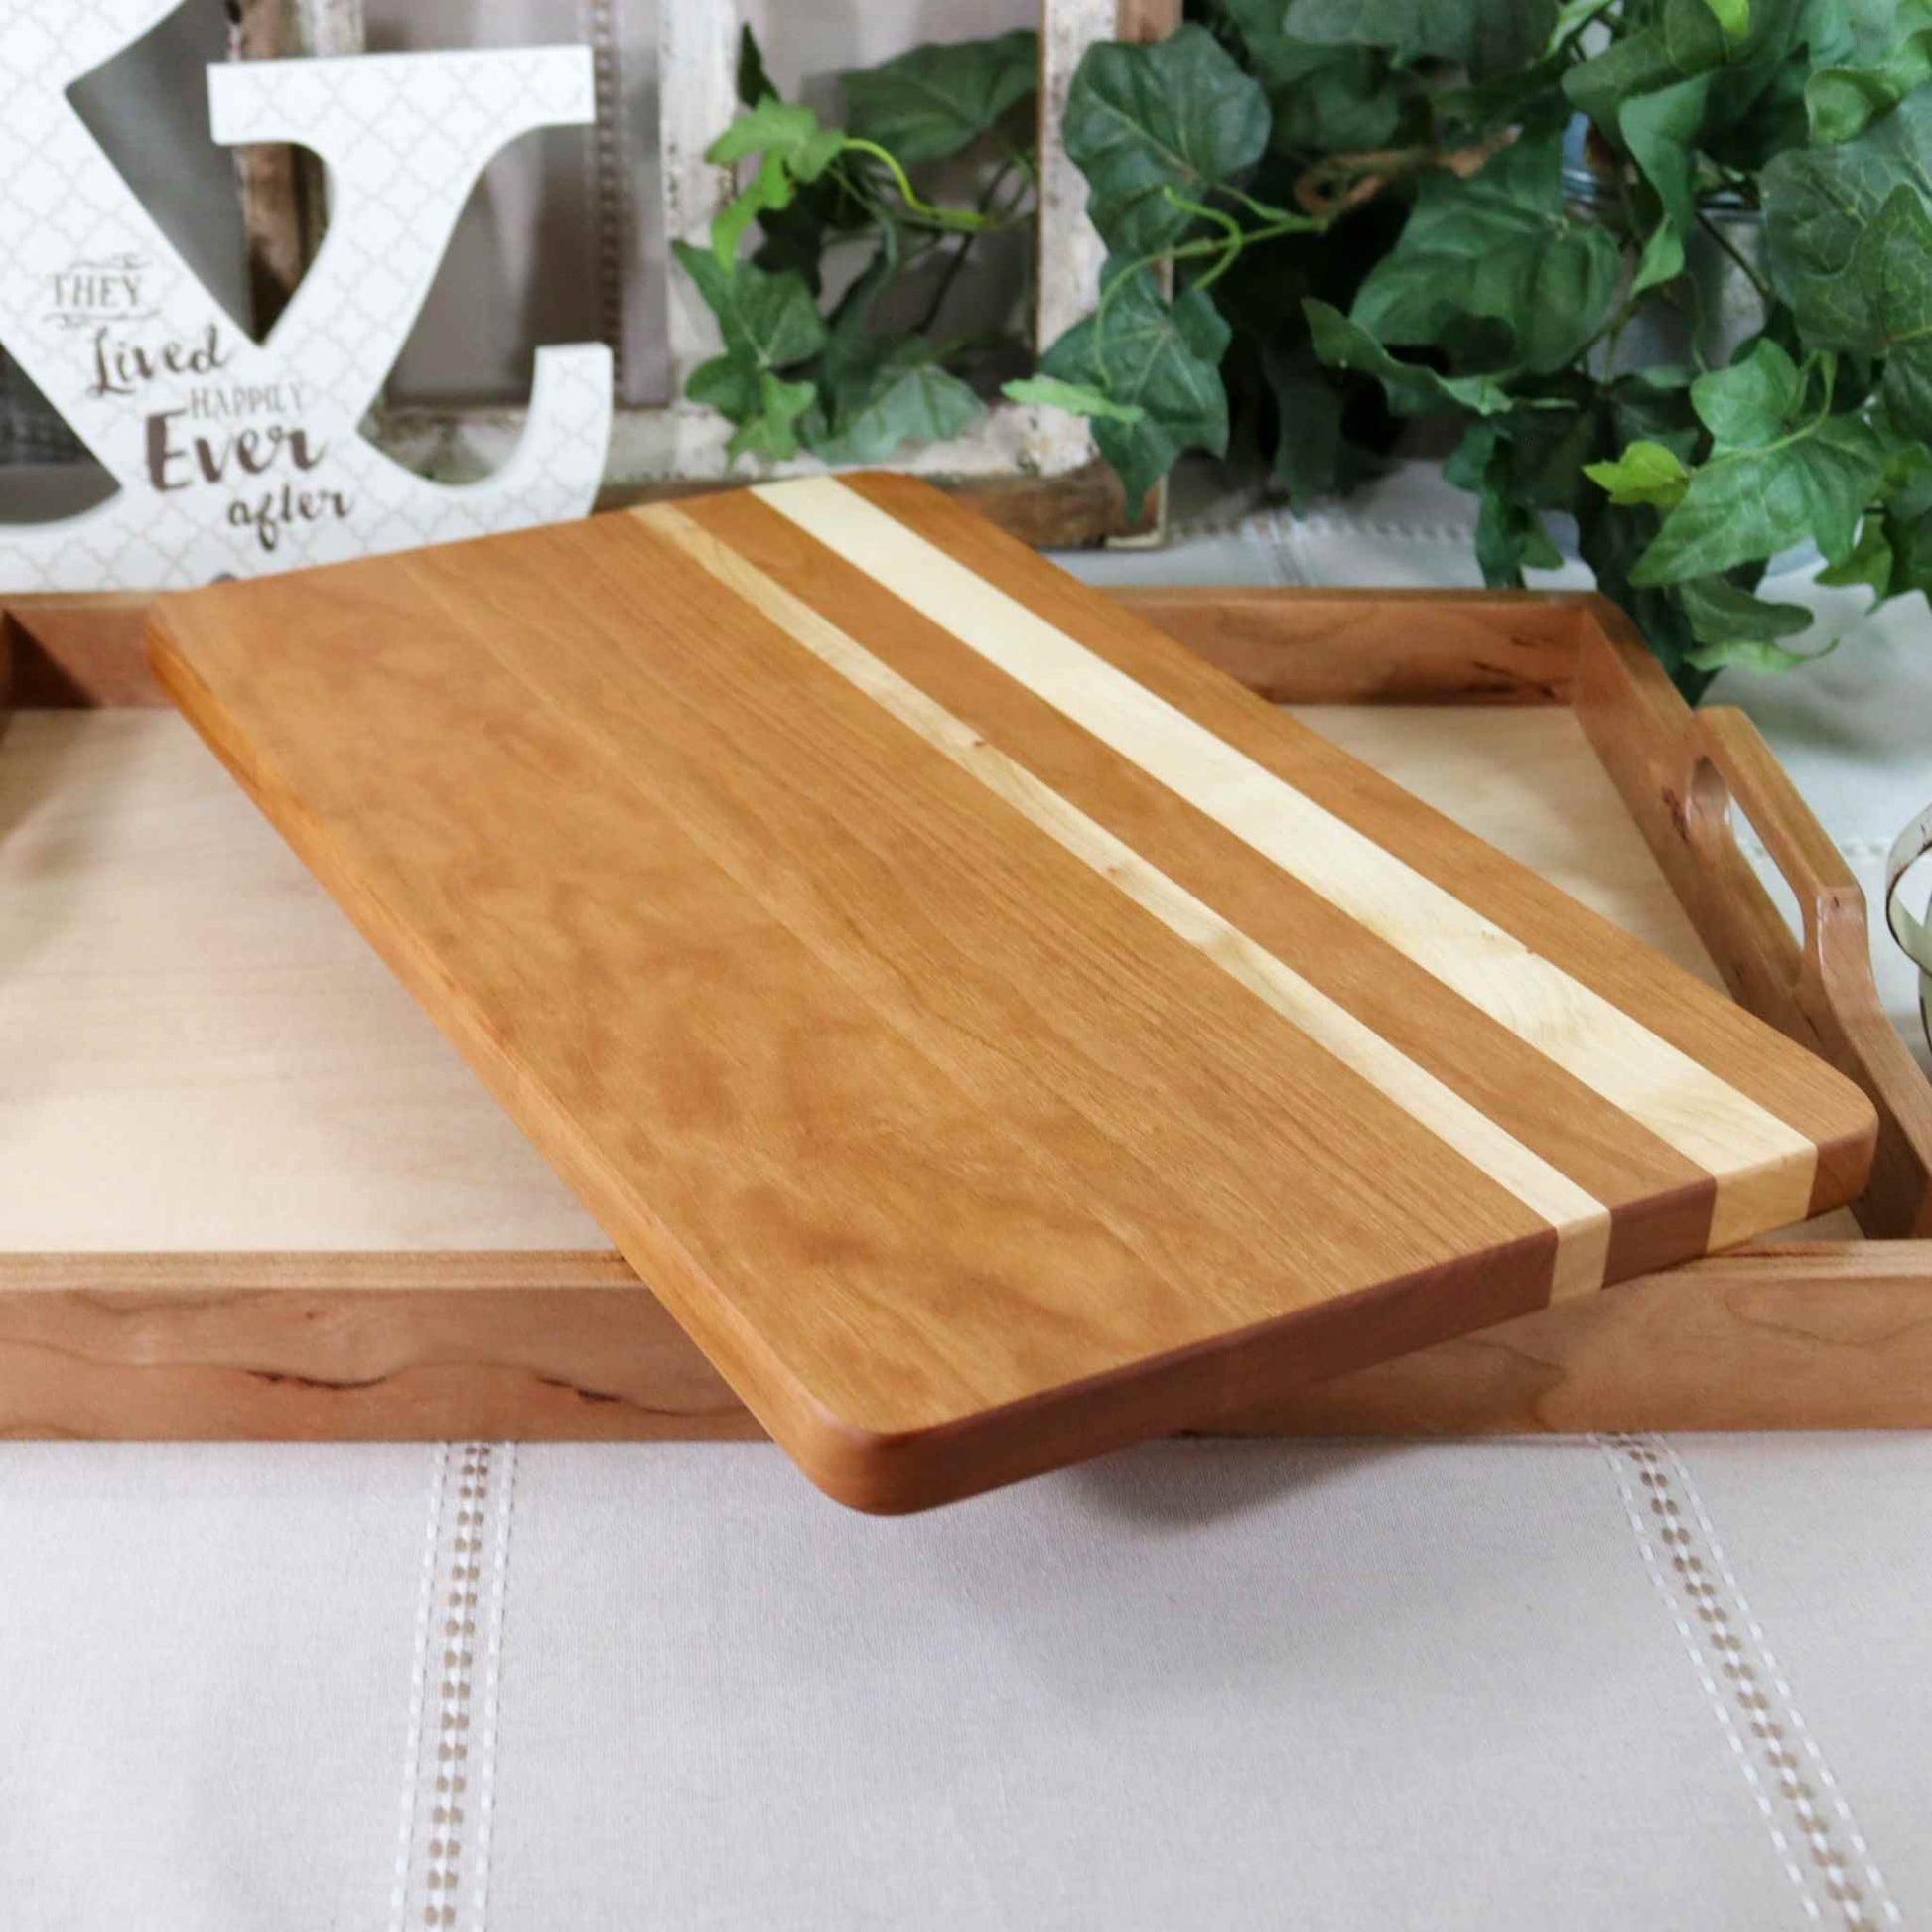 Wood Handled Cutting Board (20 x 9.5 x 1) Cherry, Maple, Oak Inlay